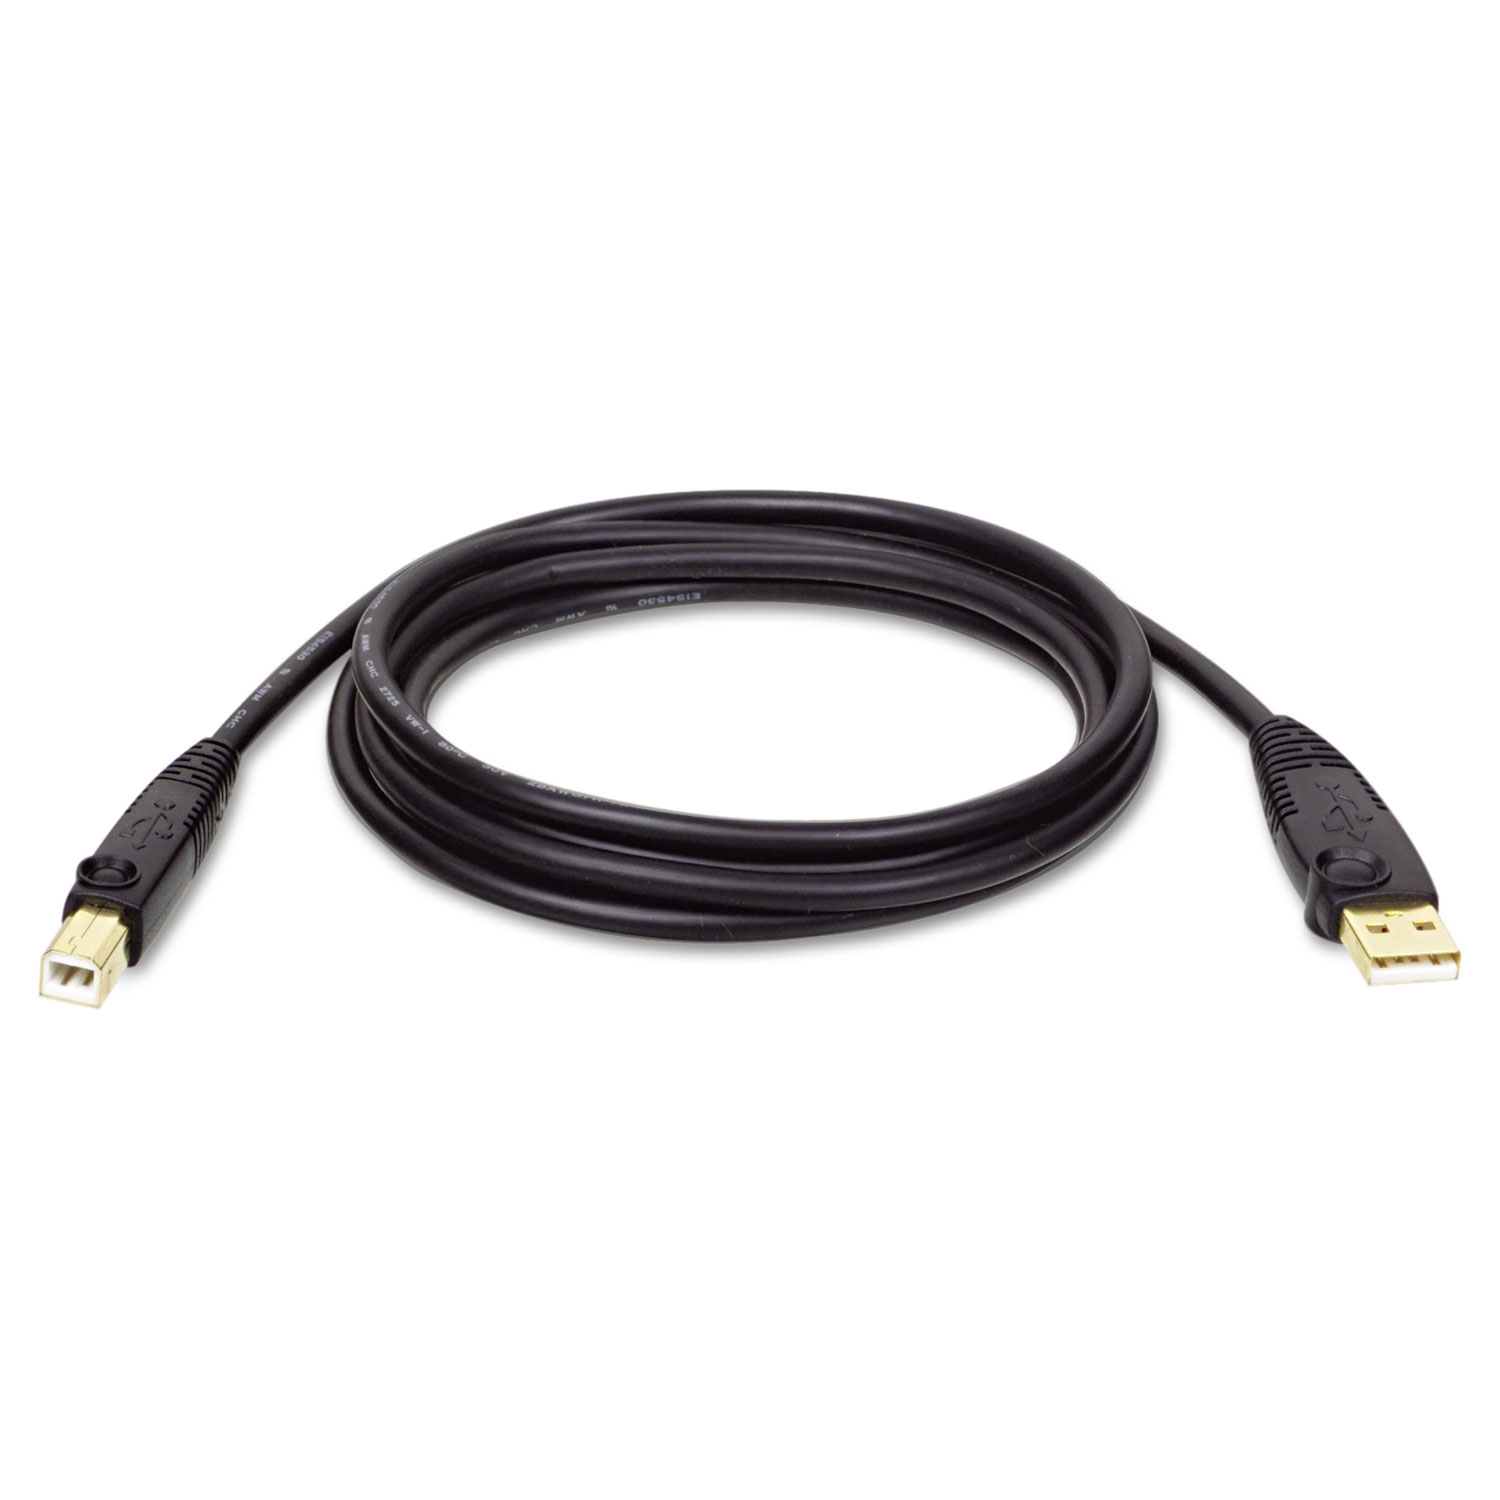  Tripp Lite U022-010 USB 2.0 A/B Cable (M/M), 10 ft., Black (TRPU022010) 